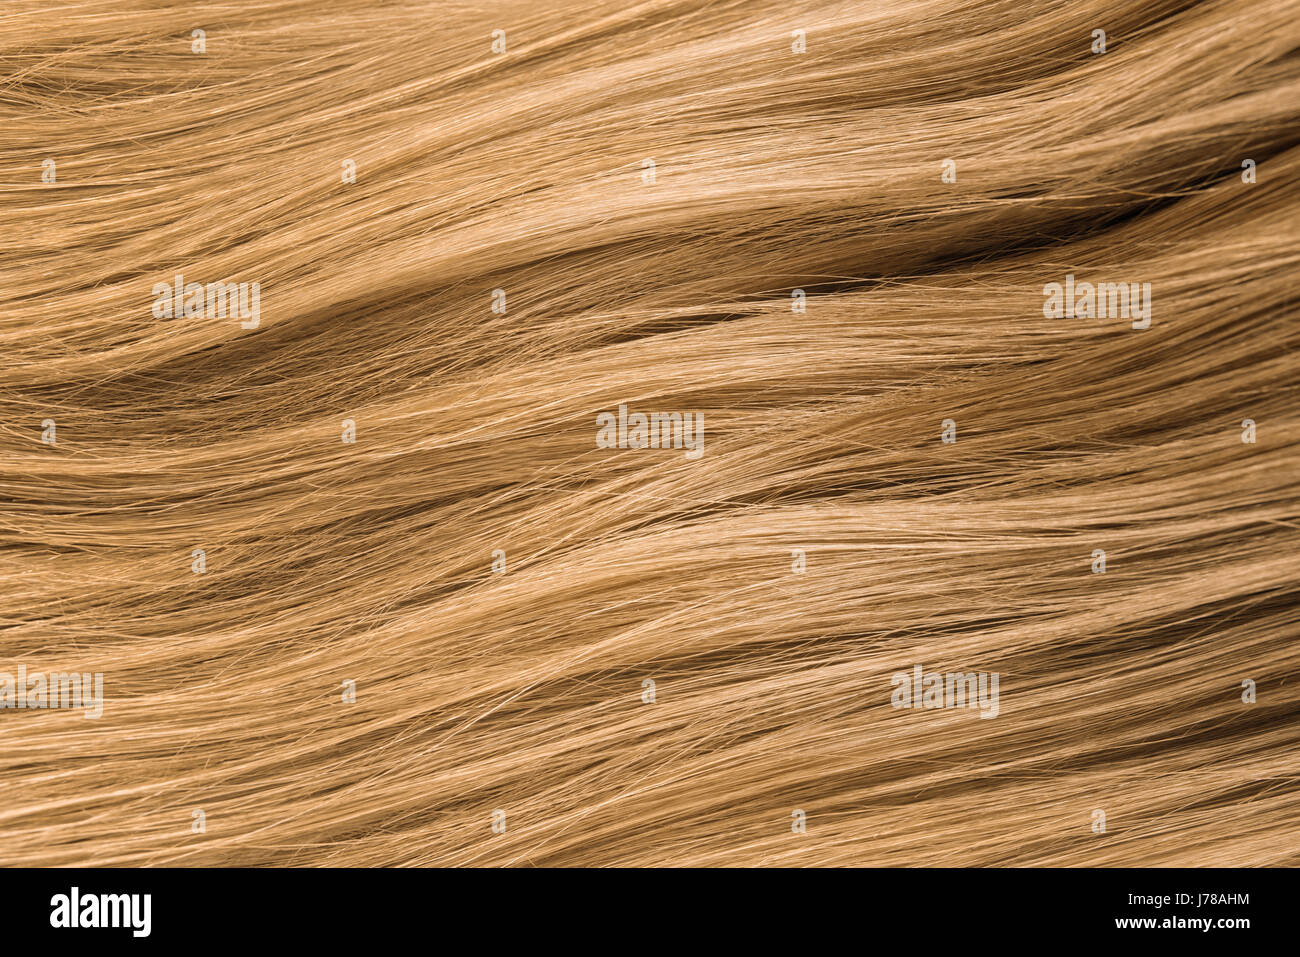 Blonde Hair. Blond Hair Texture Stock Photo